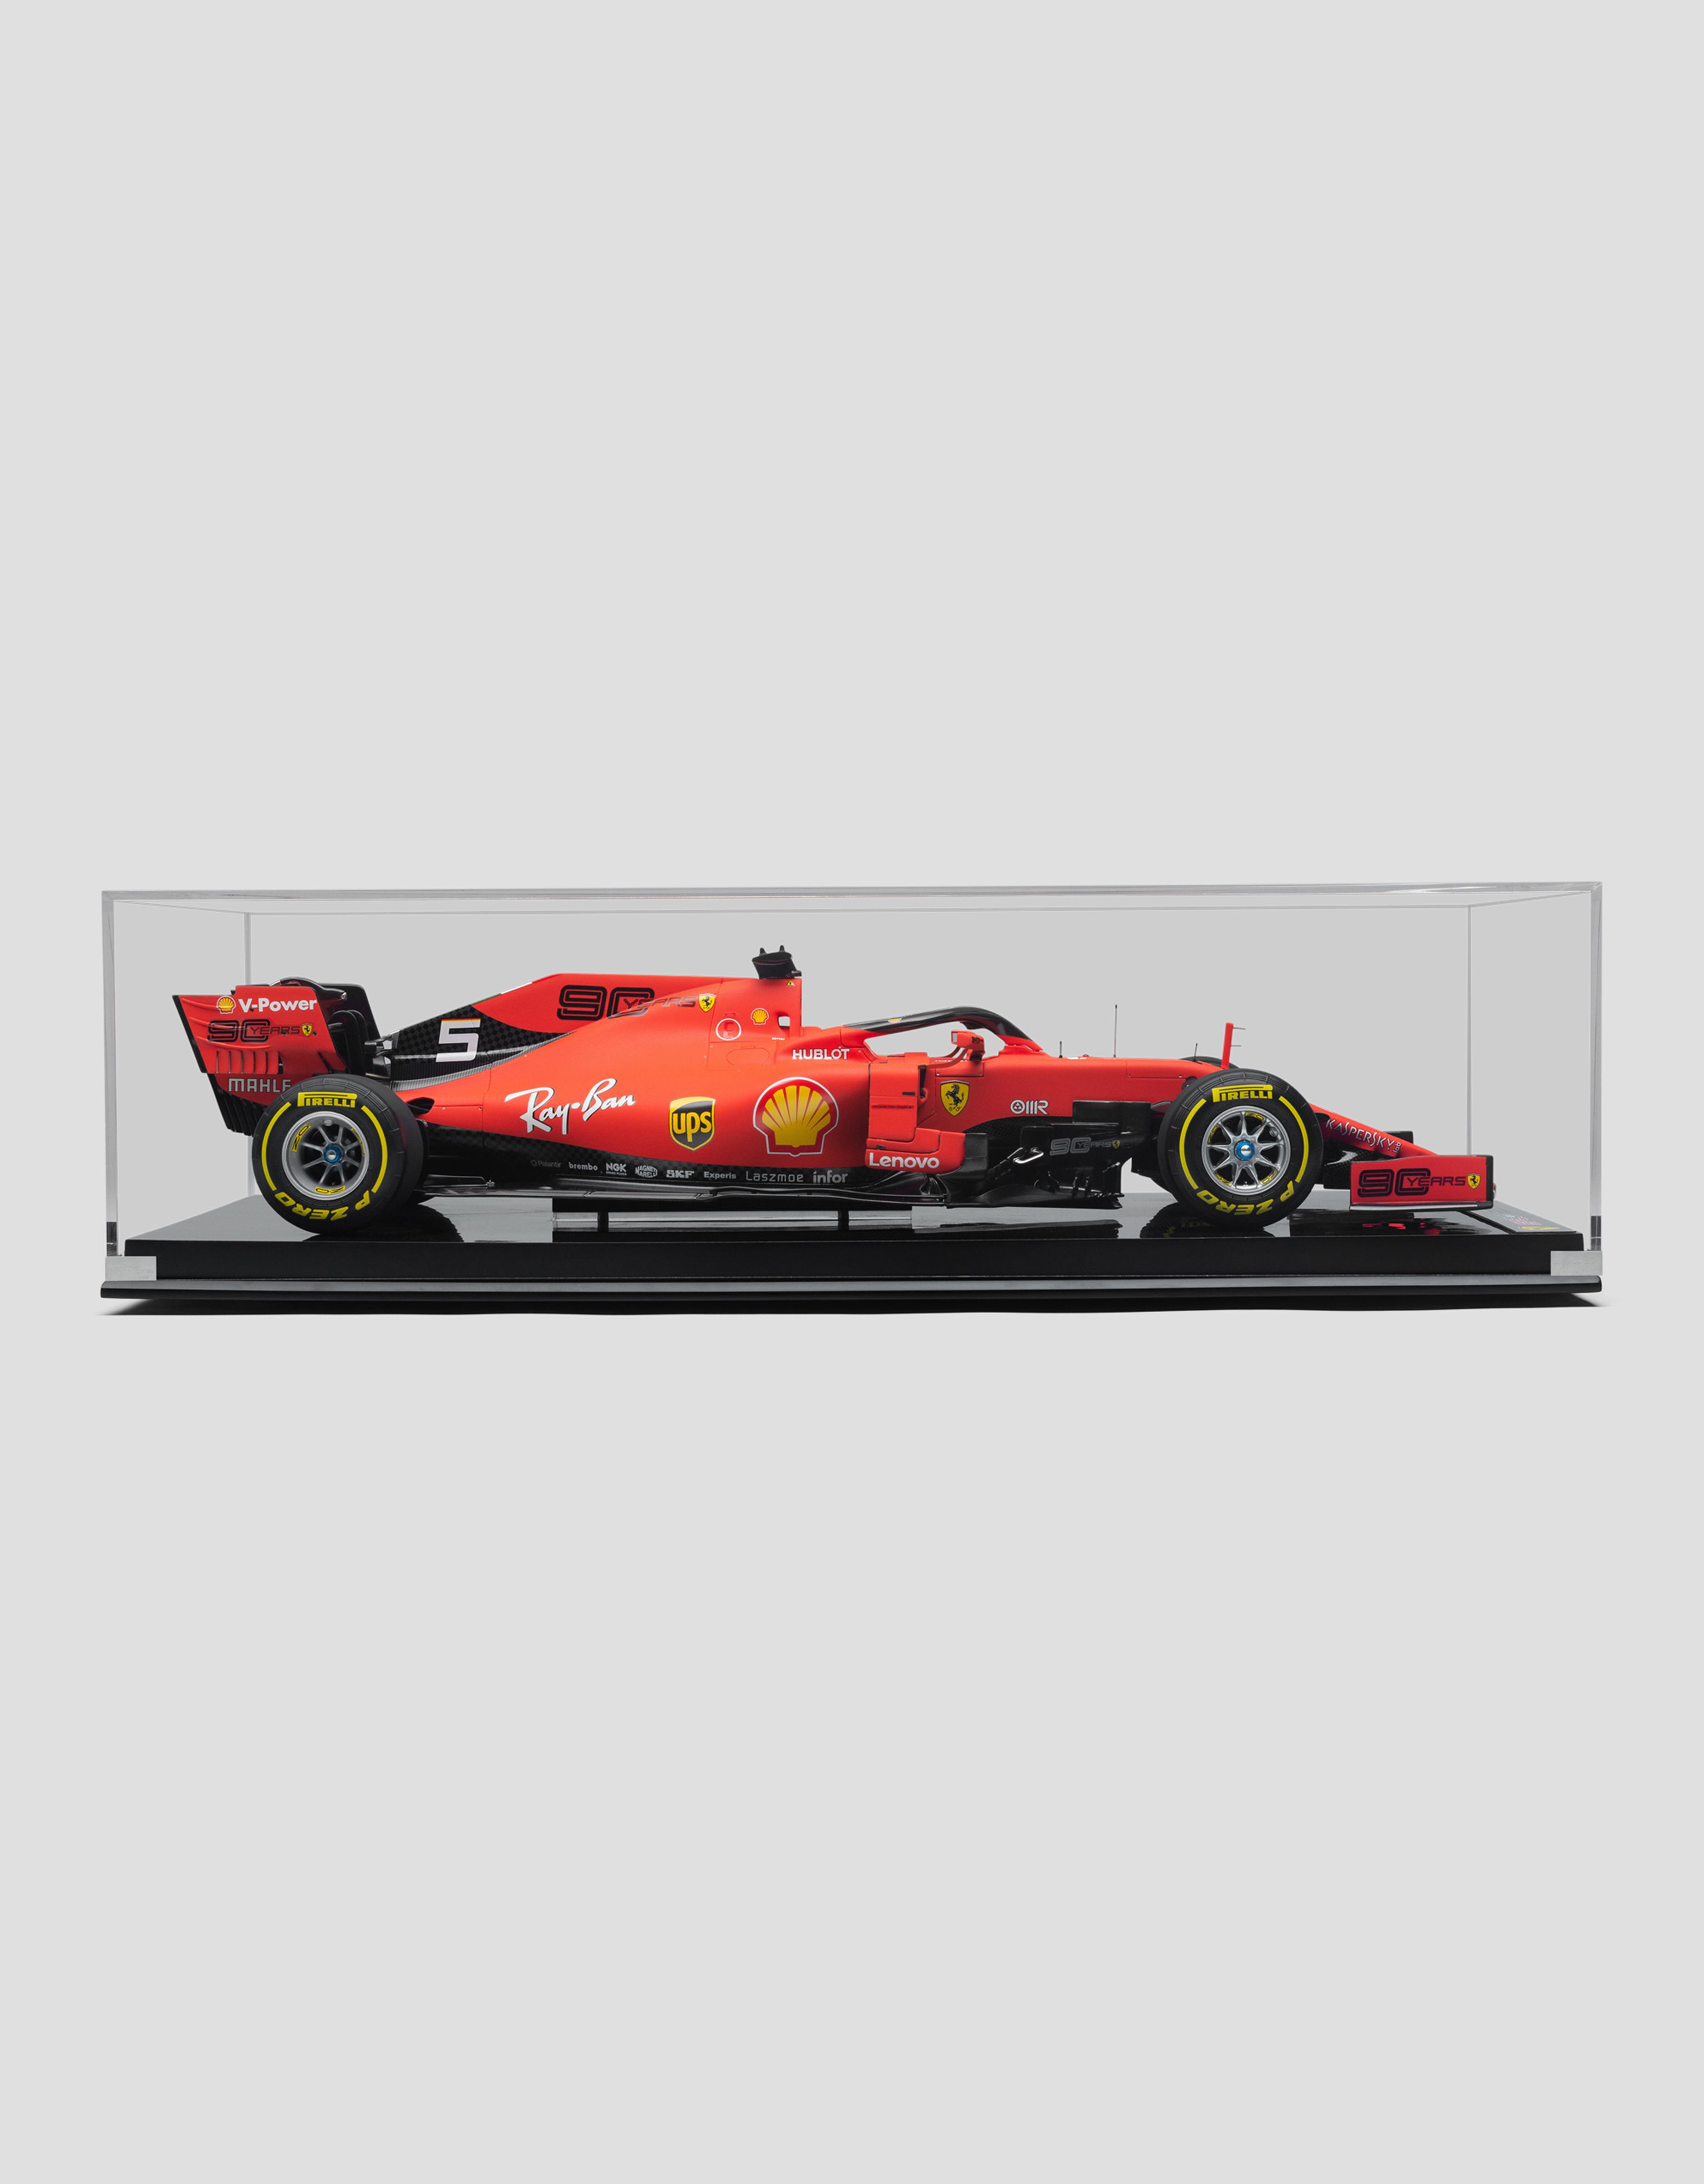 Ferrari 法拉利 SF90 Vettel 1:8 比例汽车模型 红色 L7981f